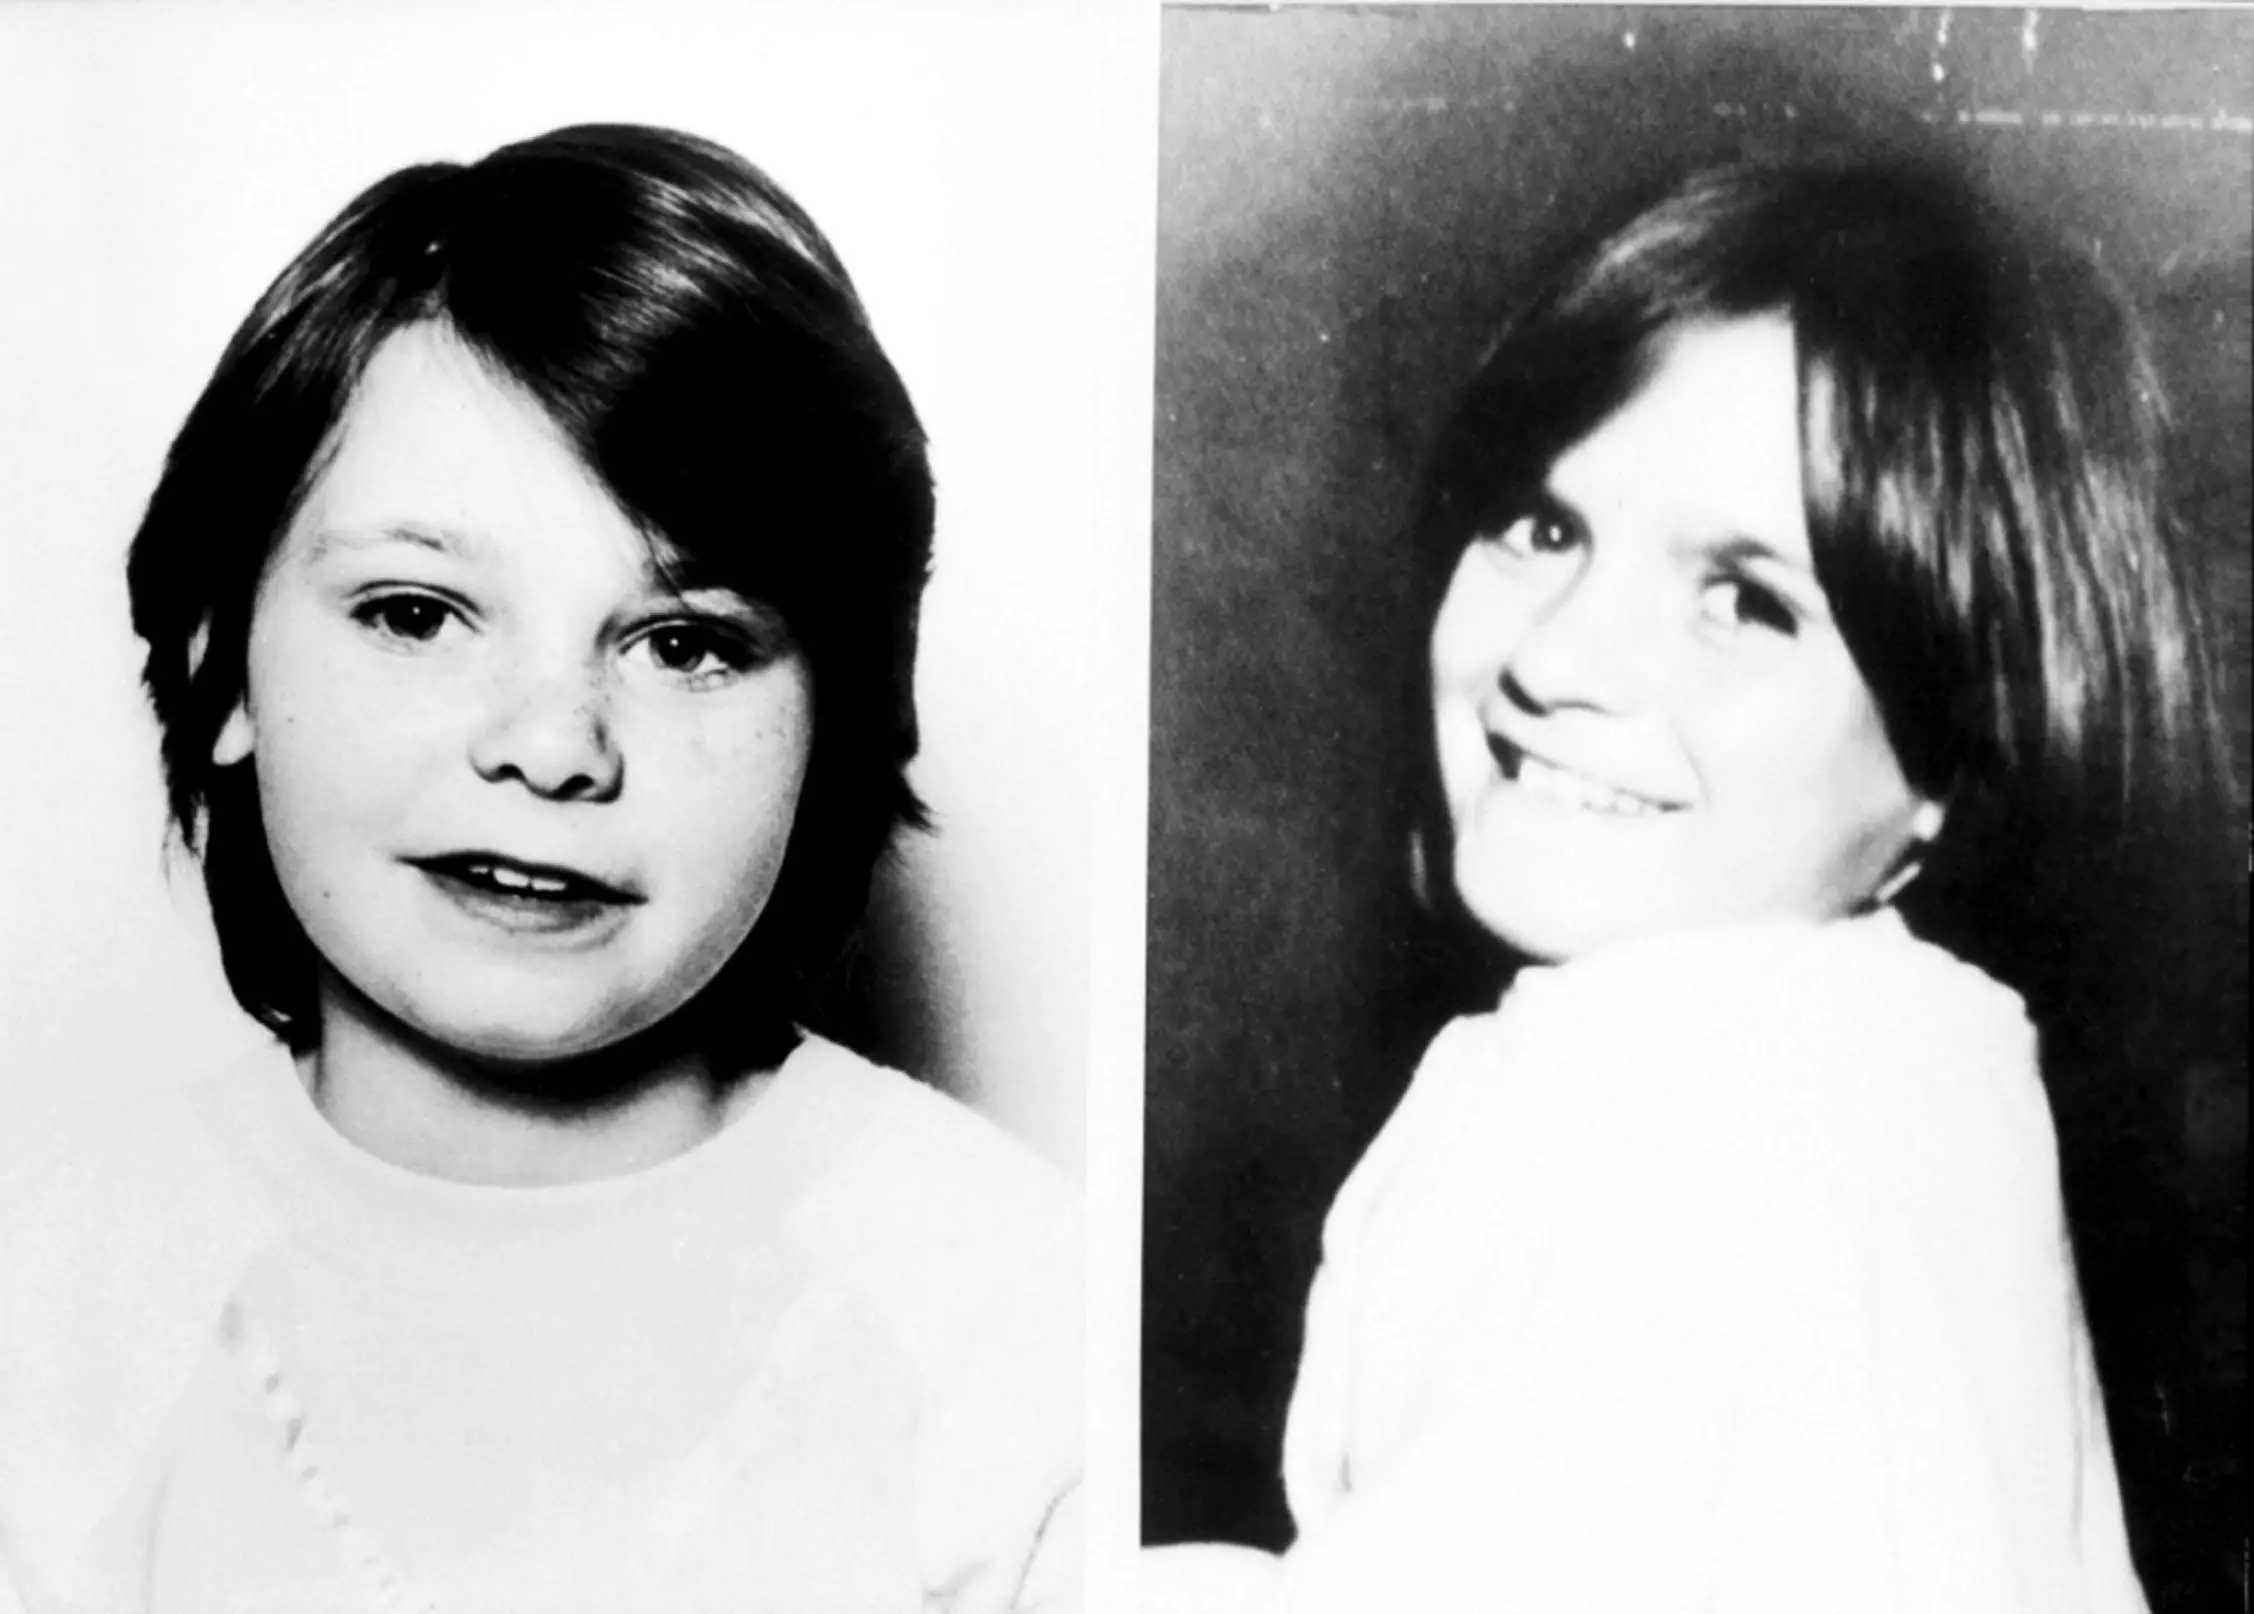 Karen Hadaway (L) and Nicola Fellows (R) were found murdered in 1986 (